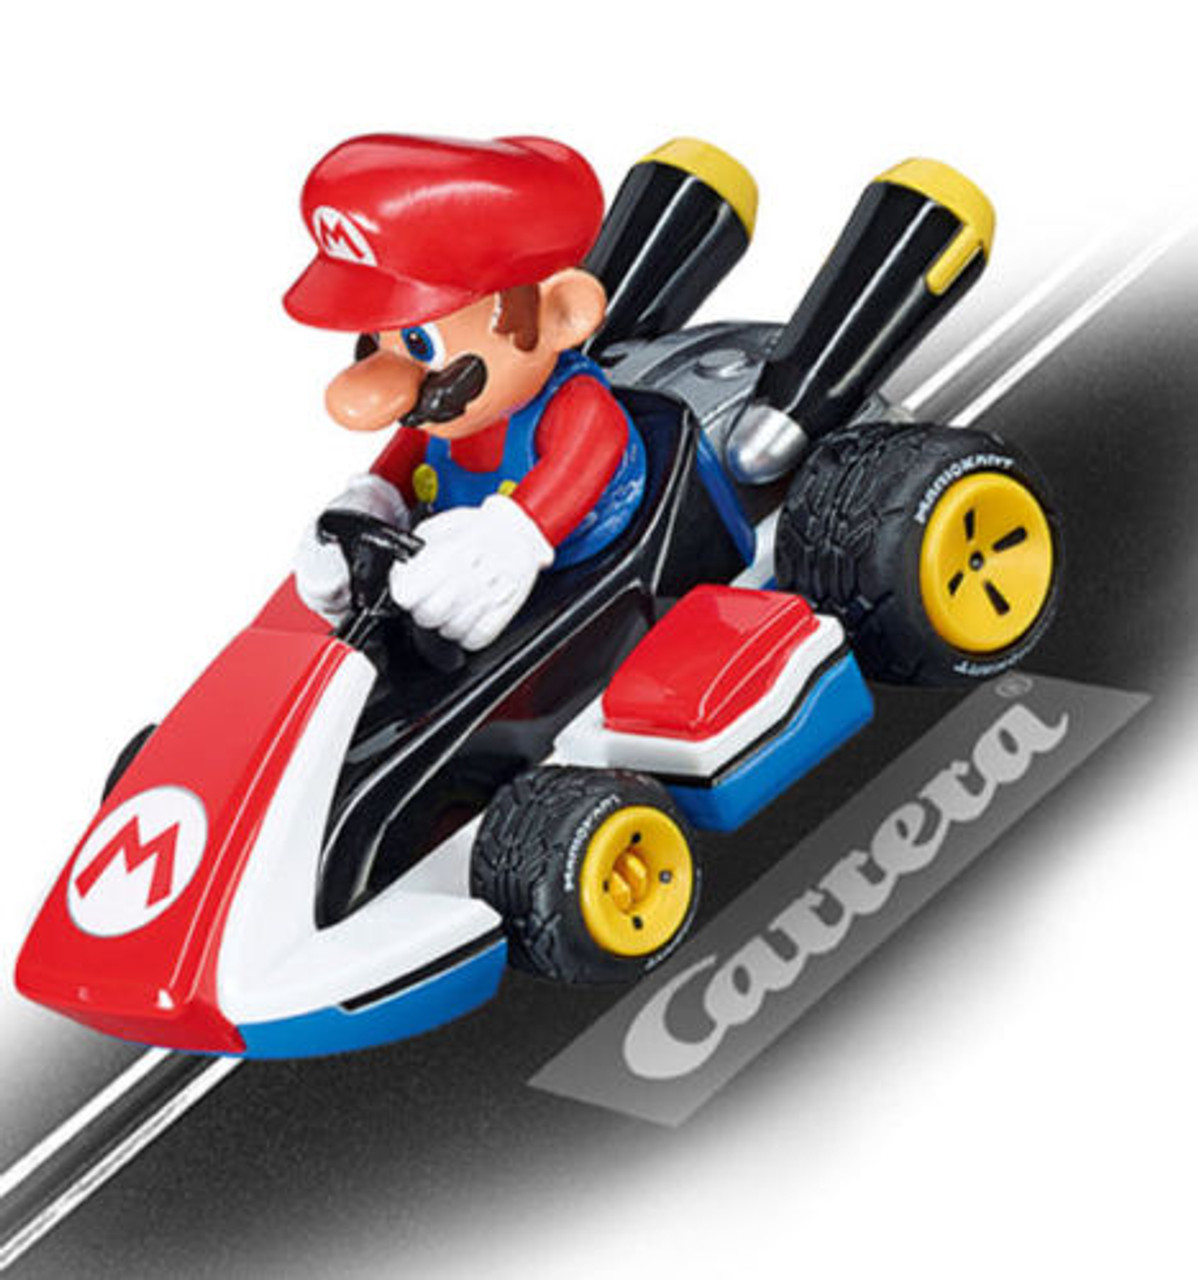 Carrera GO Mario Kart P Wing Mario 1:43 Electric Slot Car